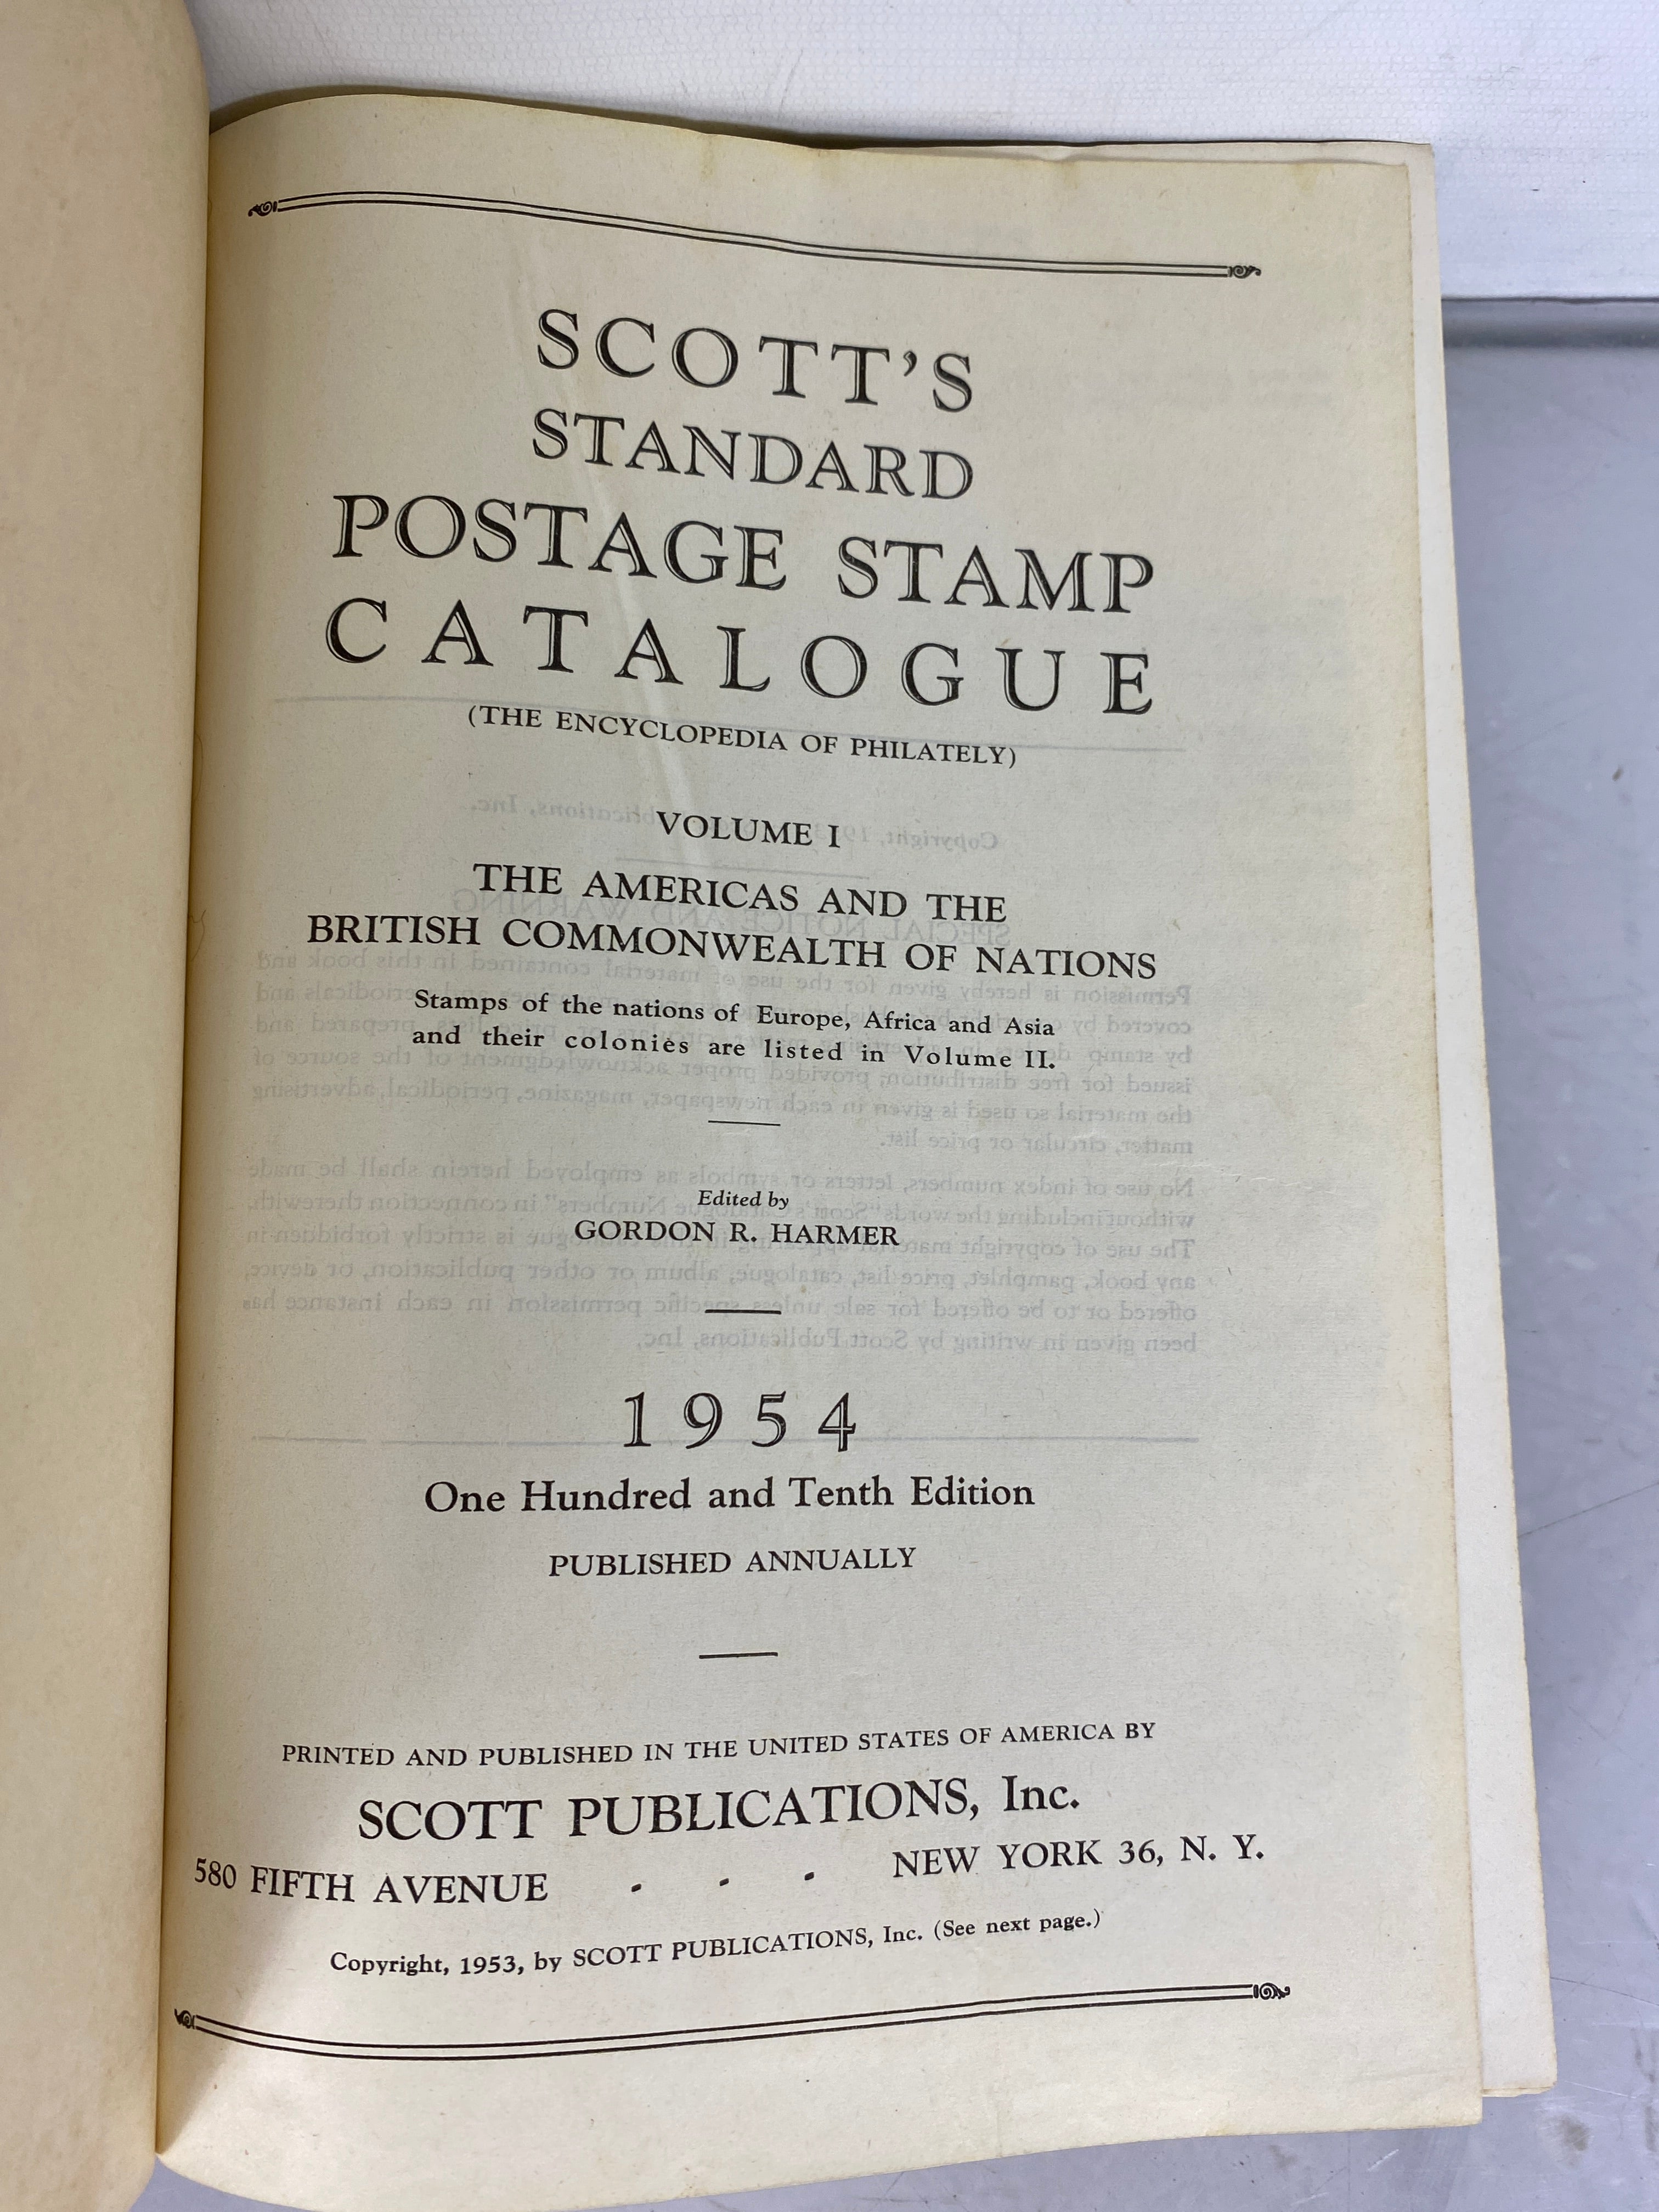 2 Volumes Scott's Standard Postage Stamp Catalogue 1954 HC